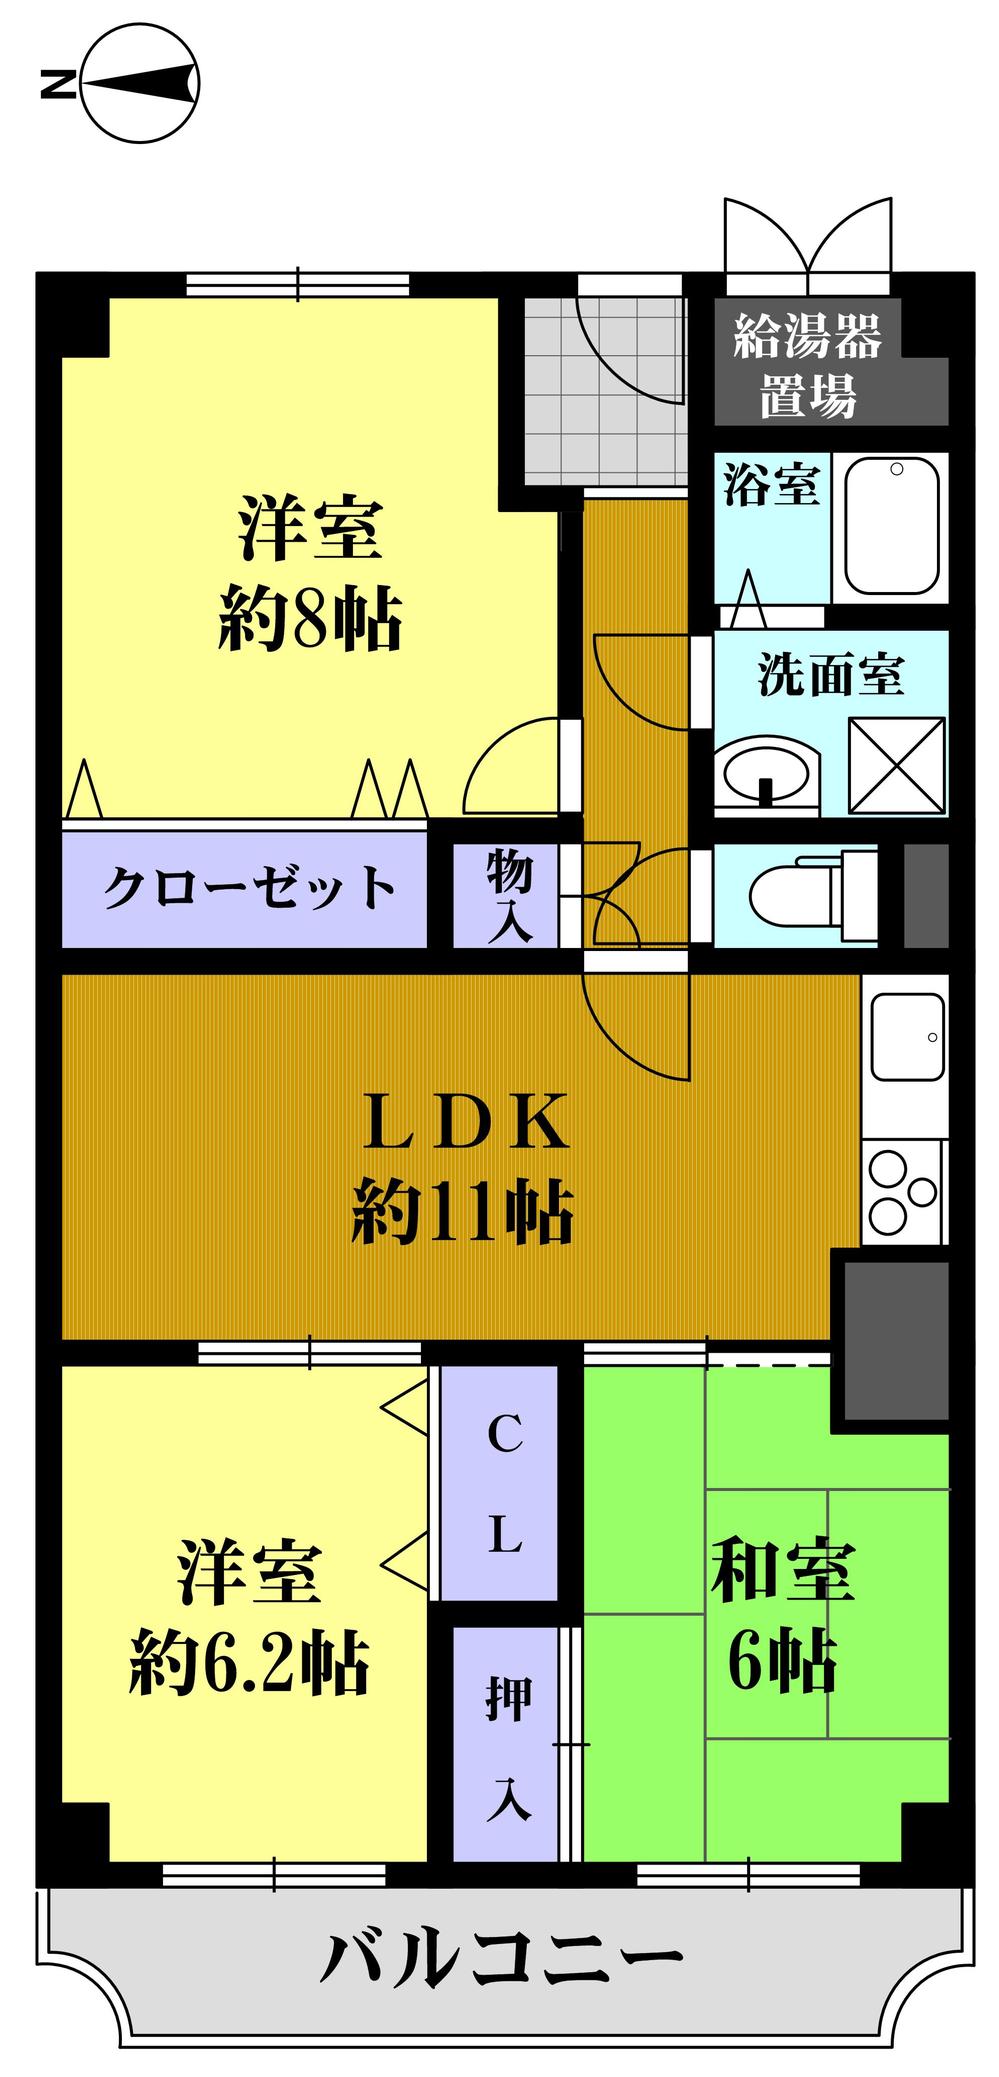 Floor plan. 3LDK, Price 12.8 million yen, Footprint 71.5 sq m , Balcony area 9.35 sq m